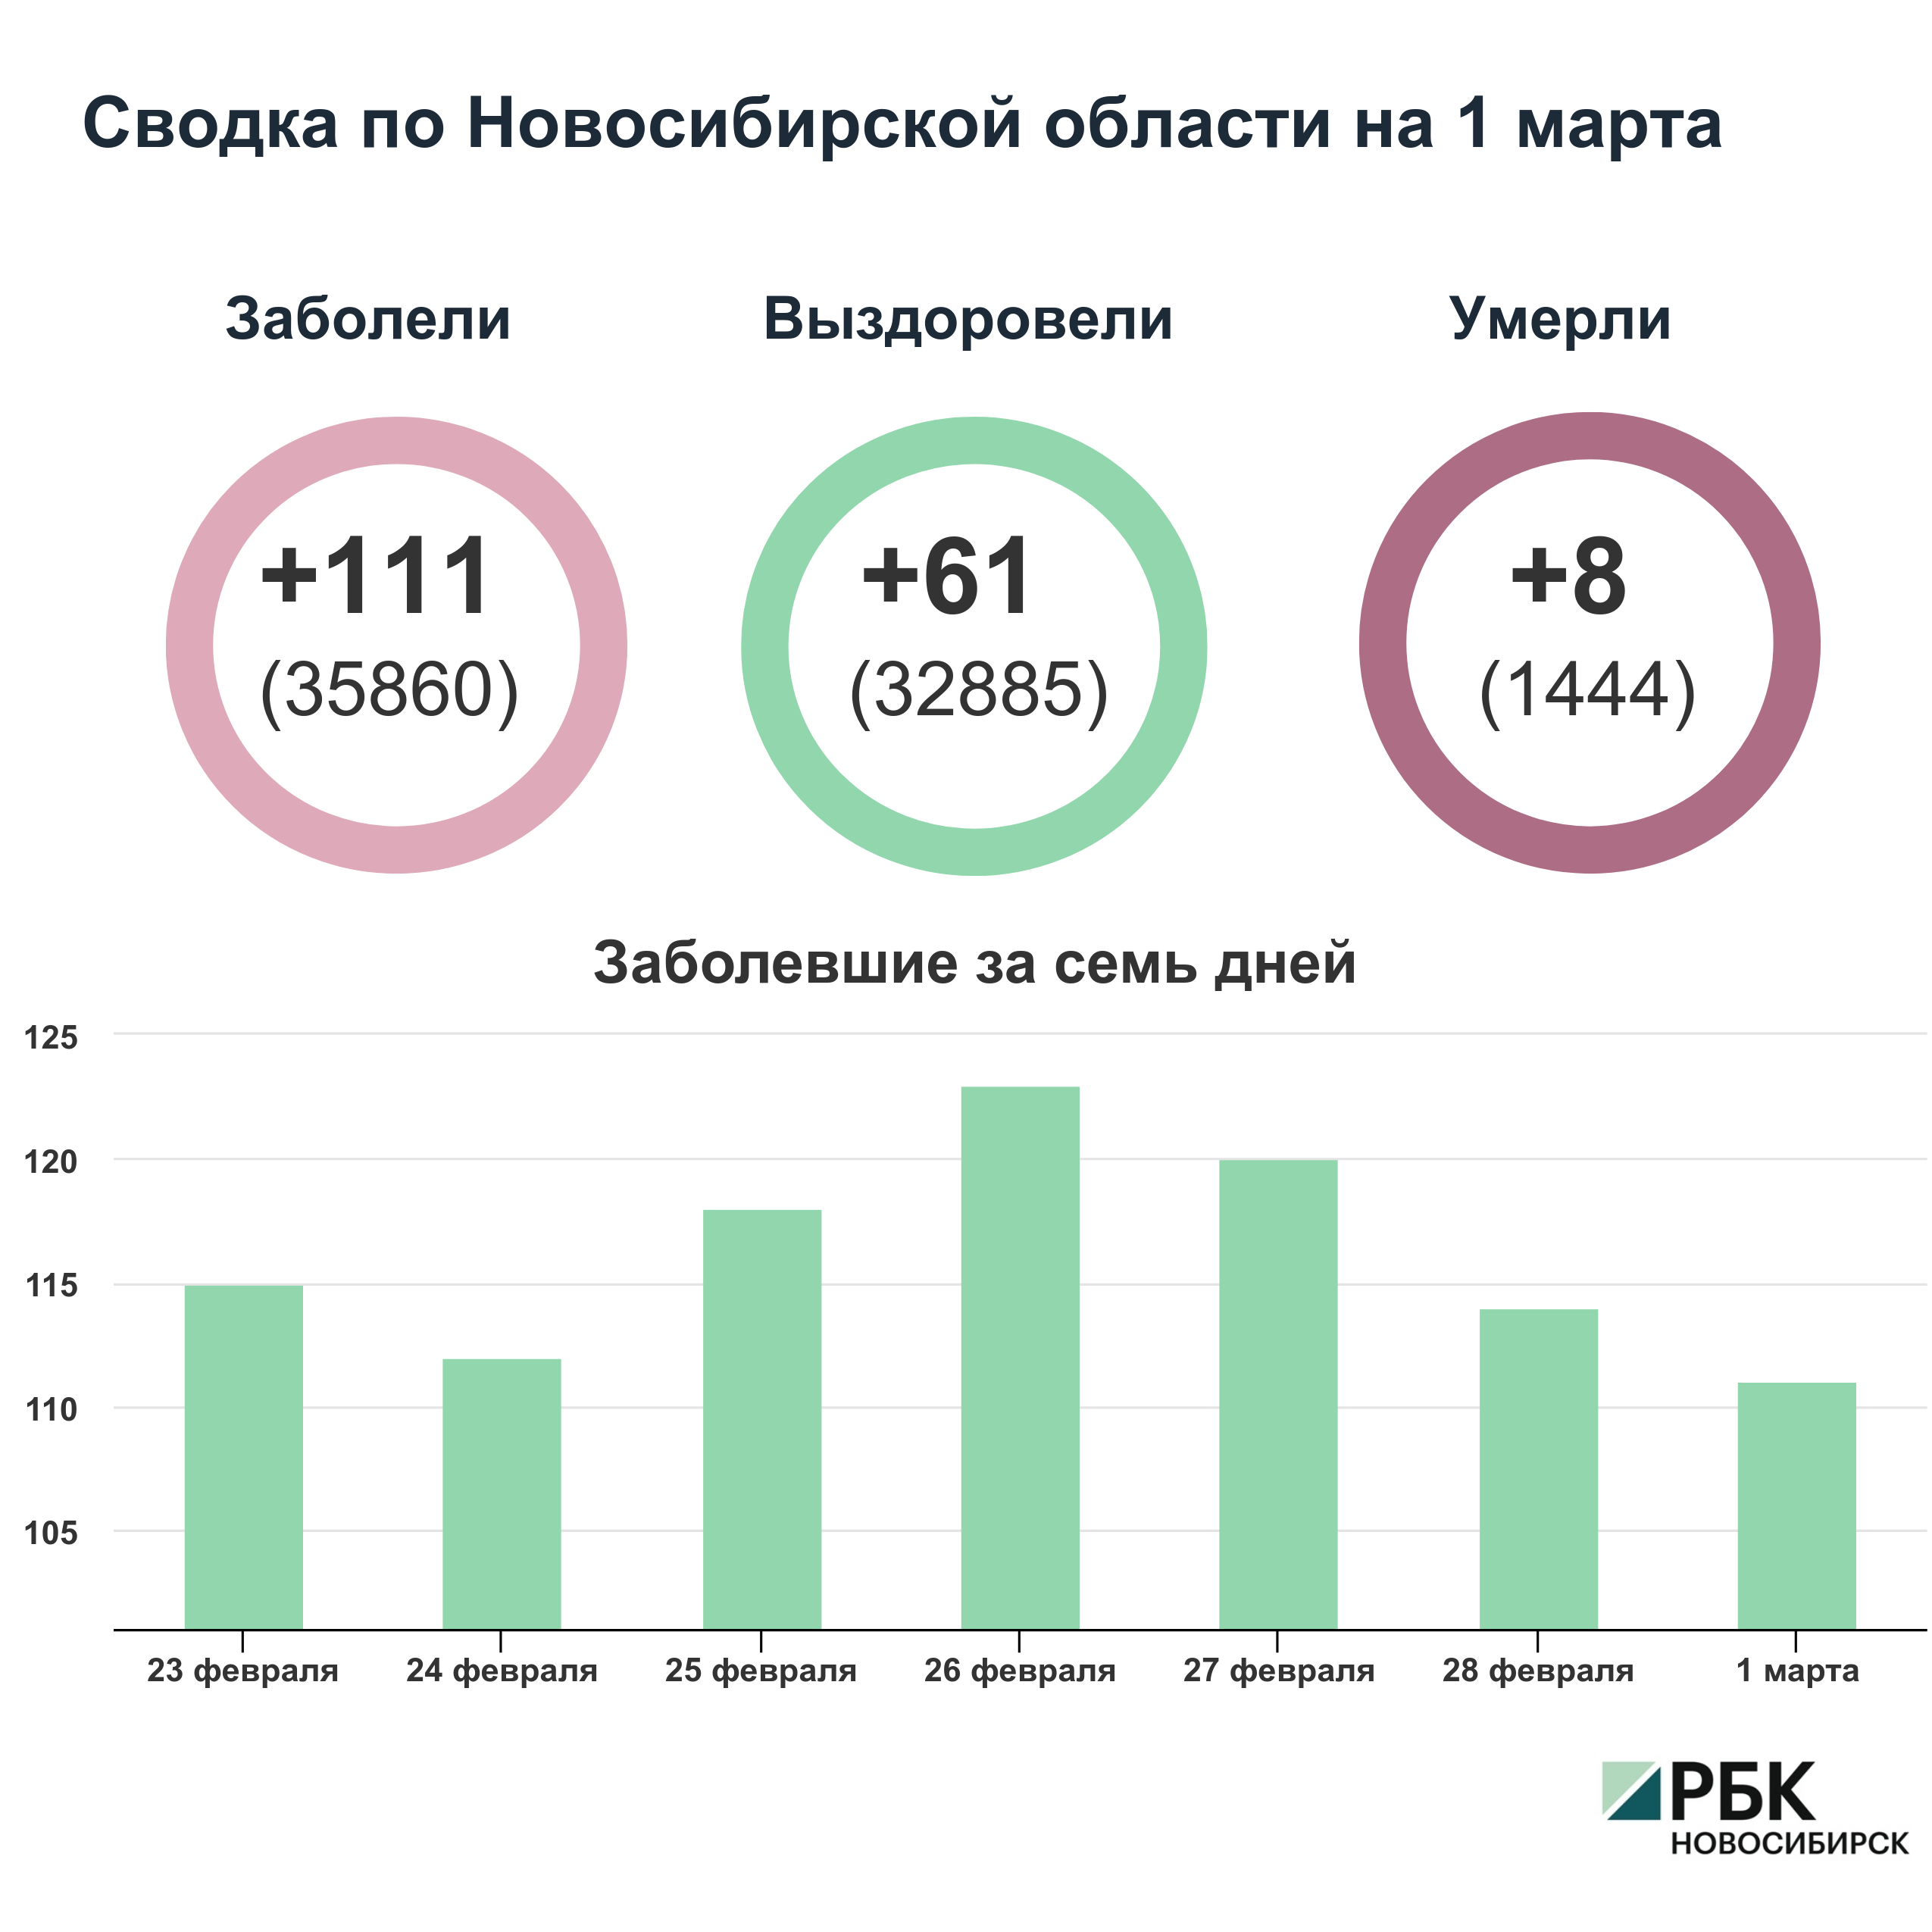 Коронавирус в Новосибирске: сводка на 1 марта